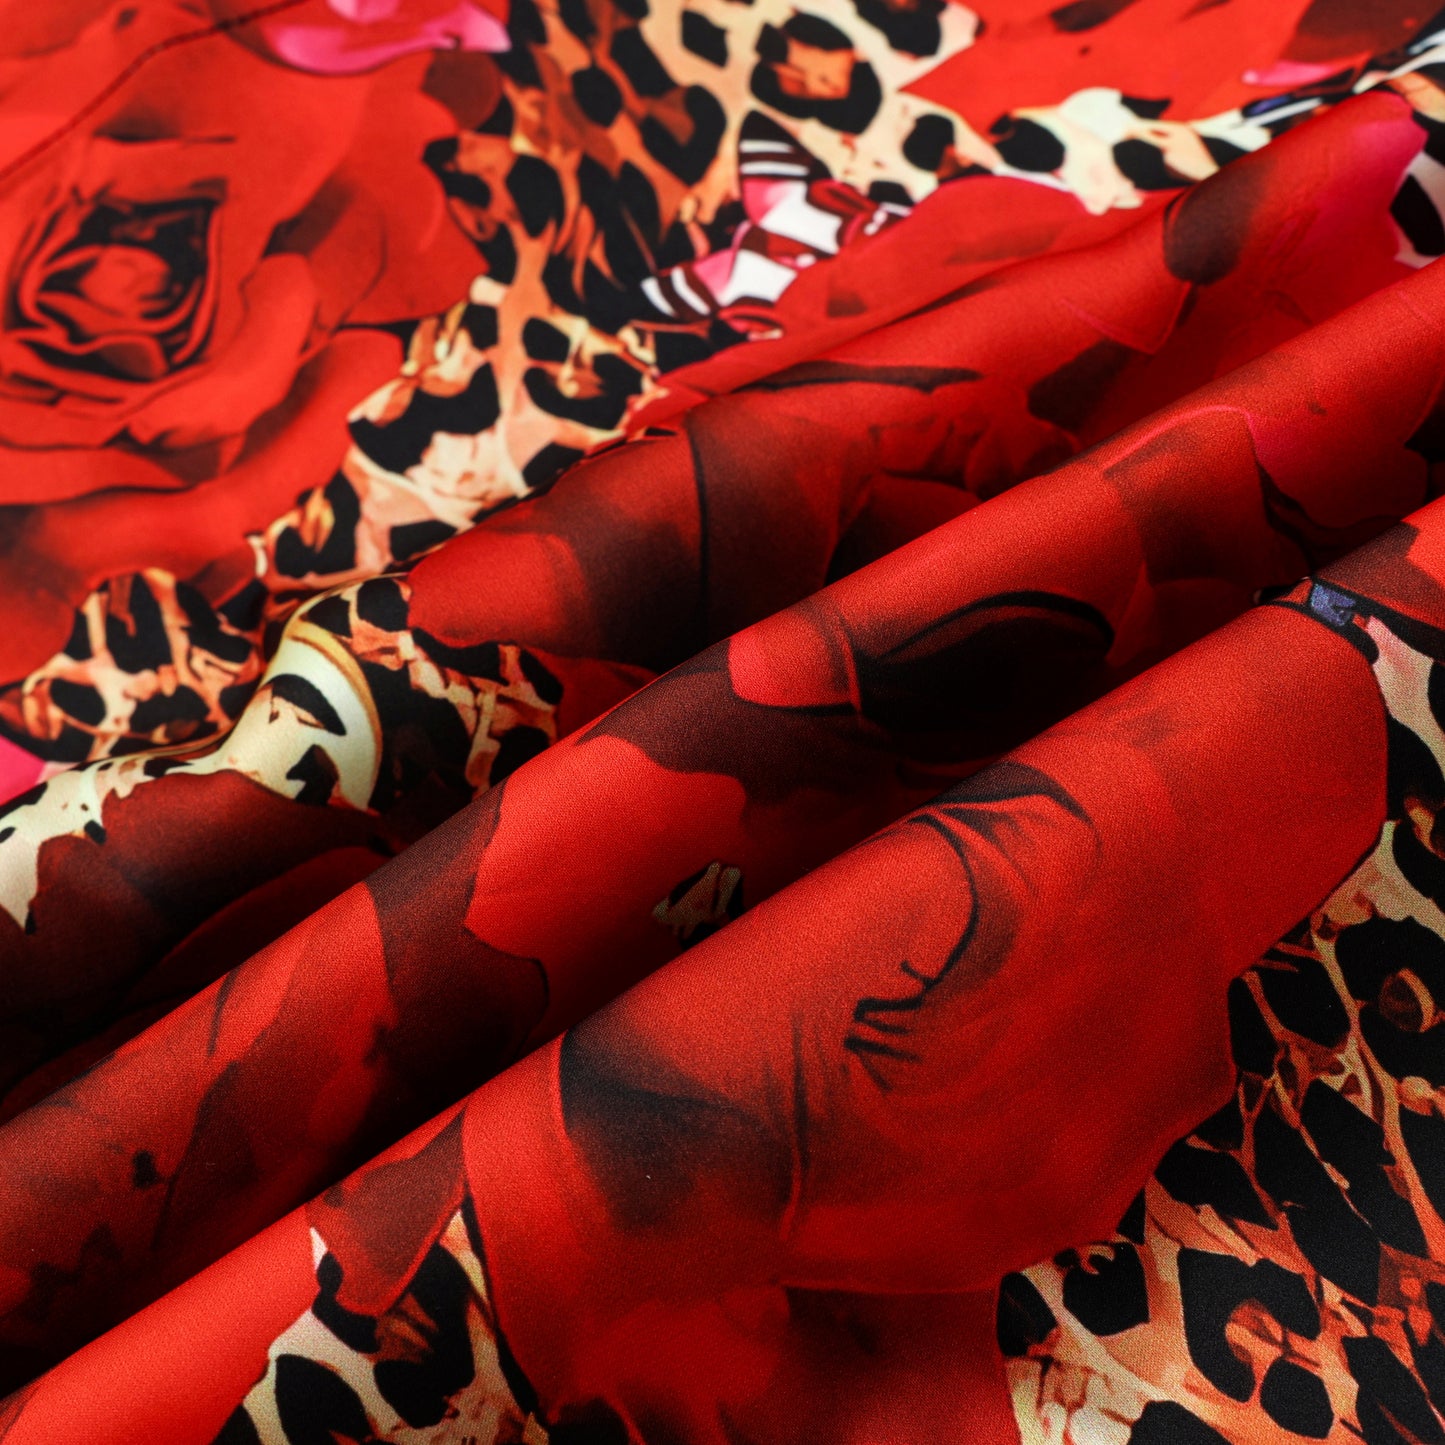 Red Rose Leopard Printed Silk Fiber Short Sleeve Shirt